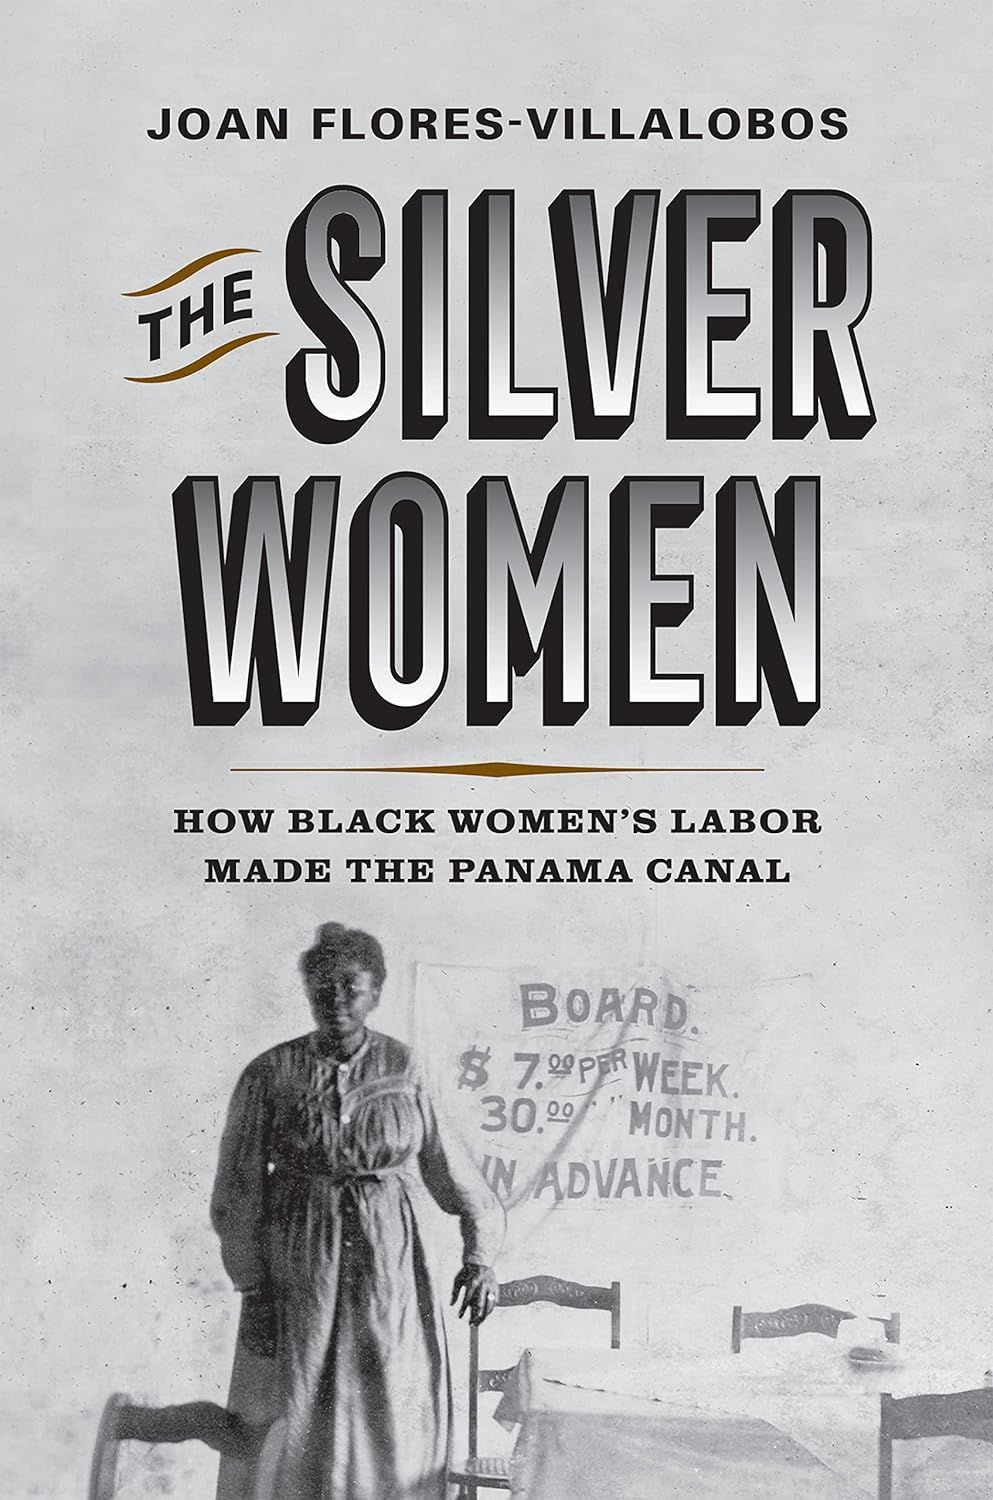 The Diasporic Worlds of Panama’s West Indian Women: On Joan Flores-Villalobos’s “The Silver Women”